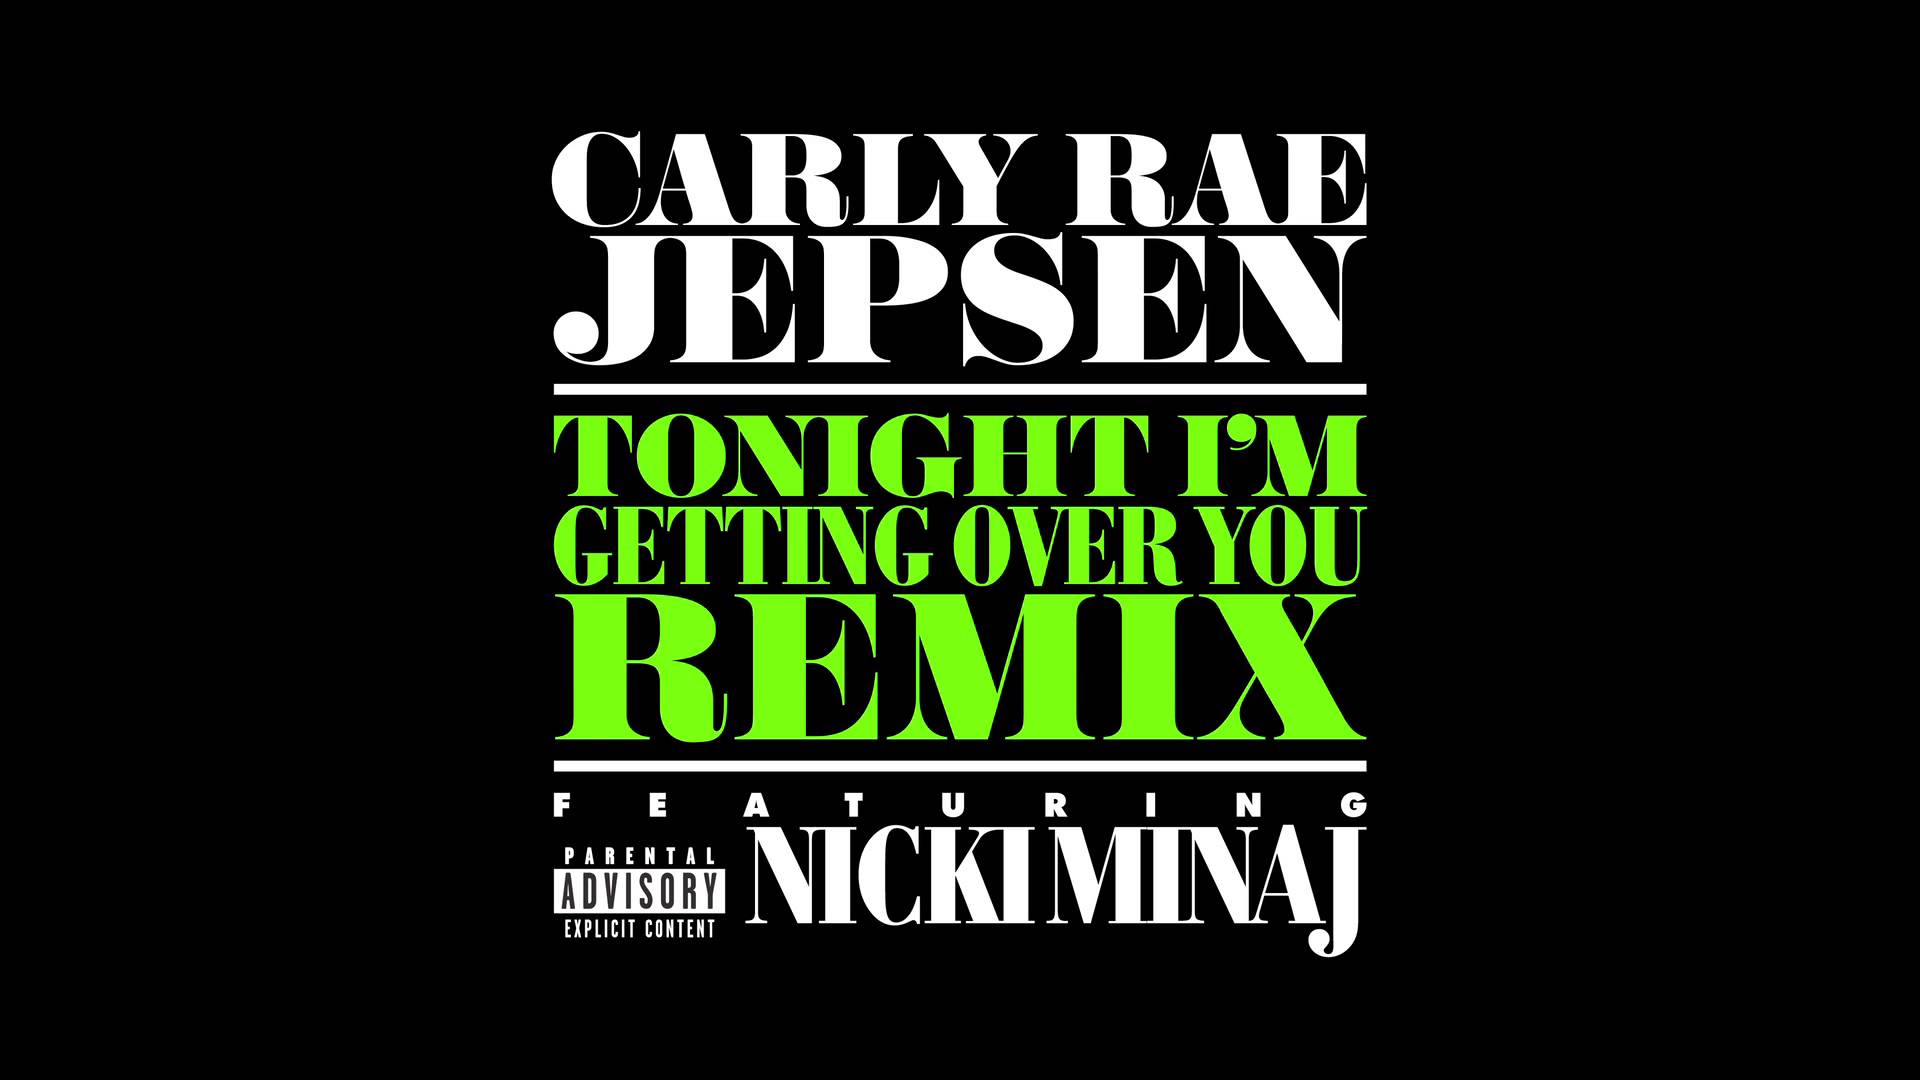 Carly Rae Jepsen - Tonight I'm Getting Over You (Remix) feat. Nicki Minaj